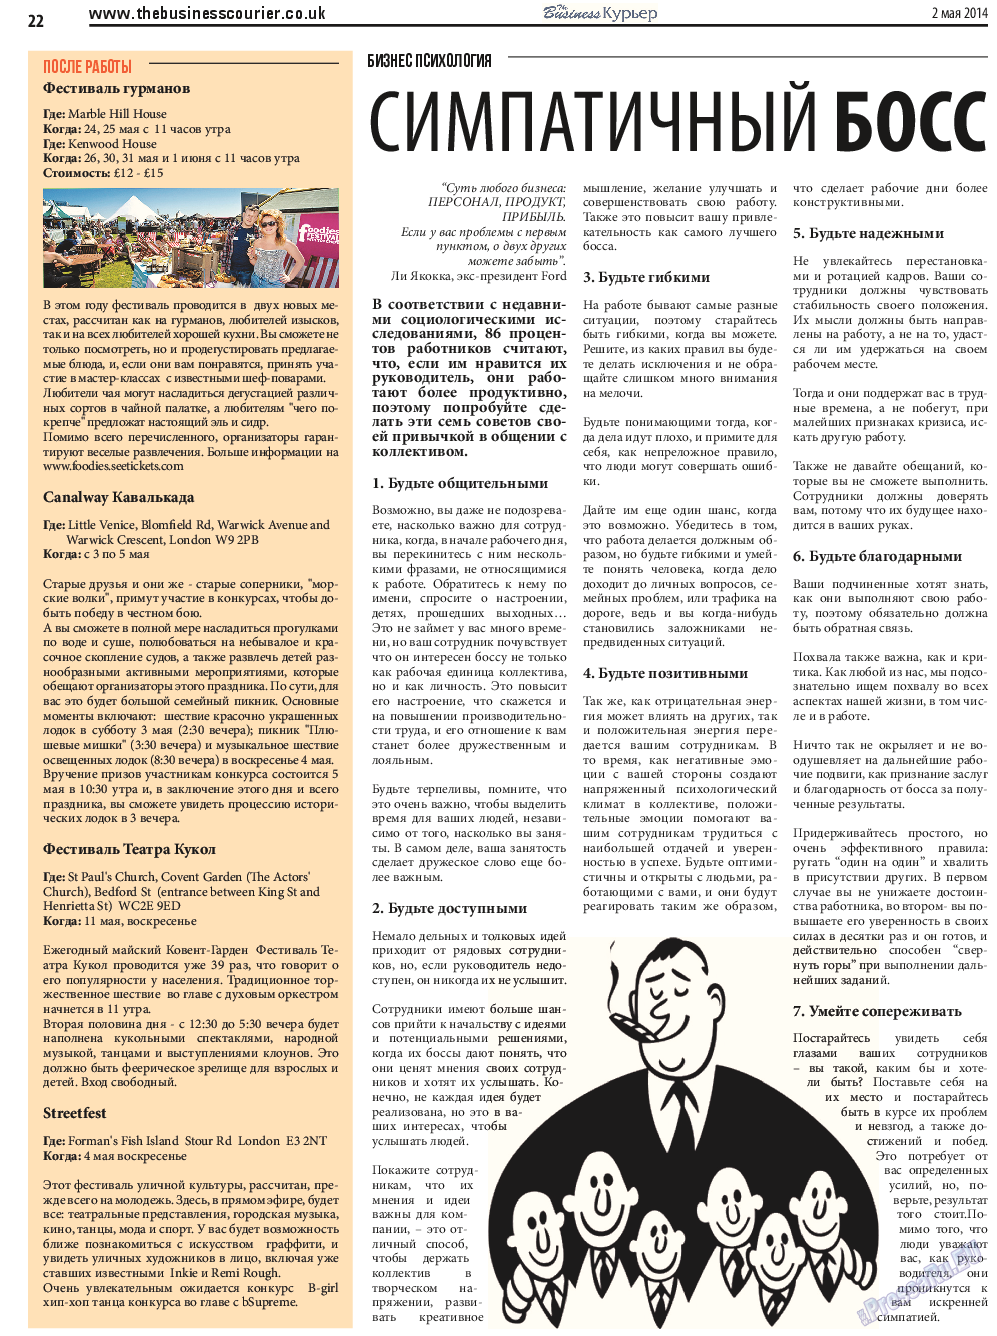 The Business Курьер, газета. 2014 №23 стр.22